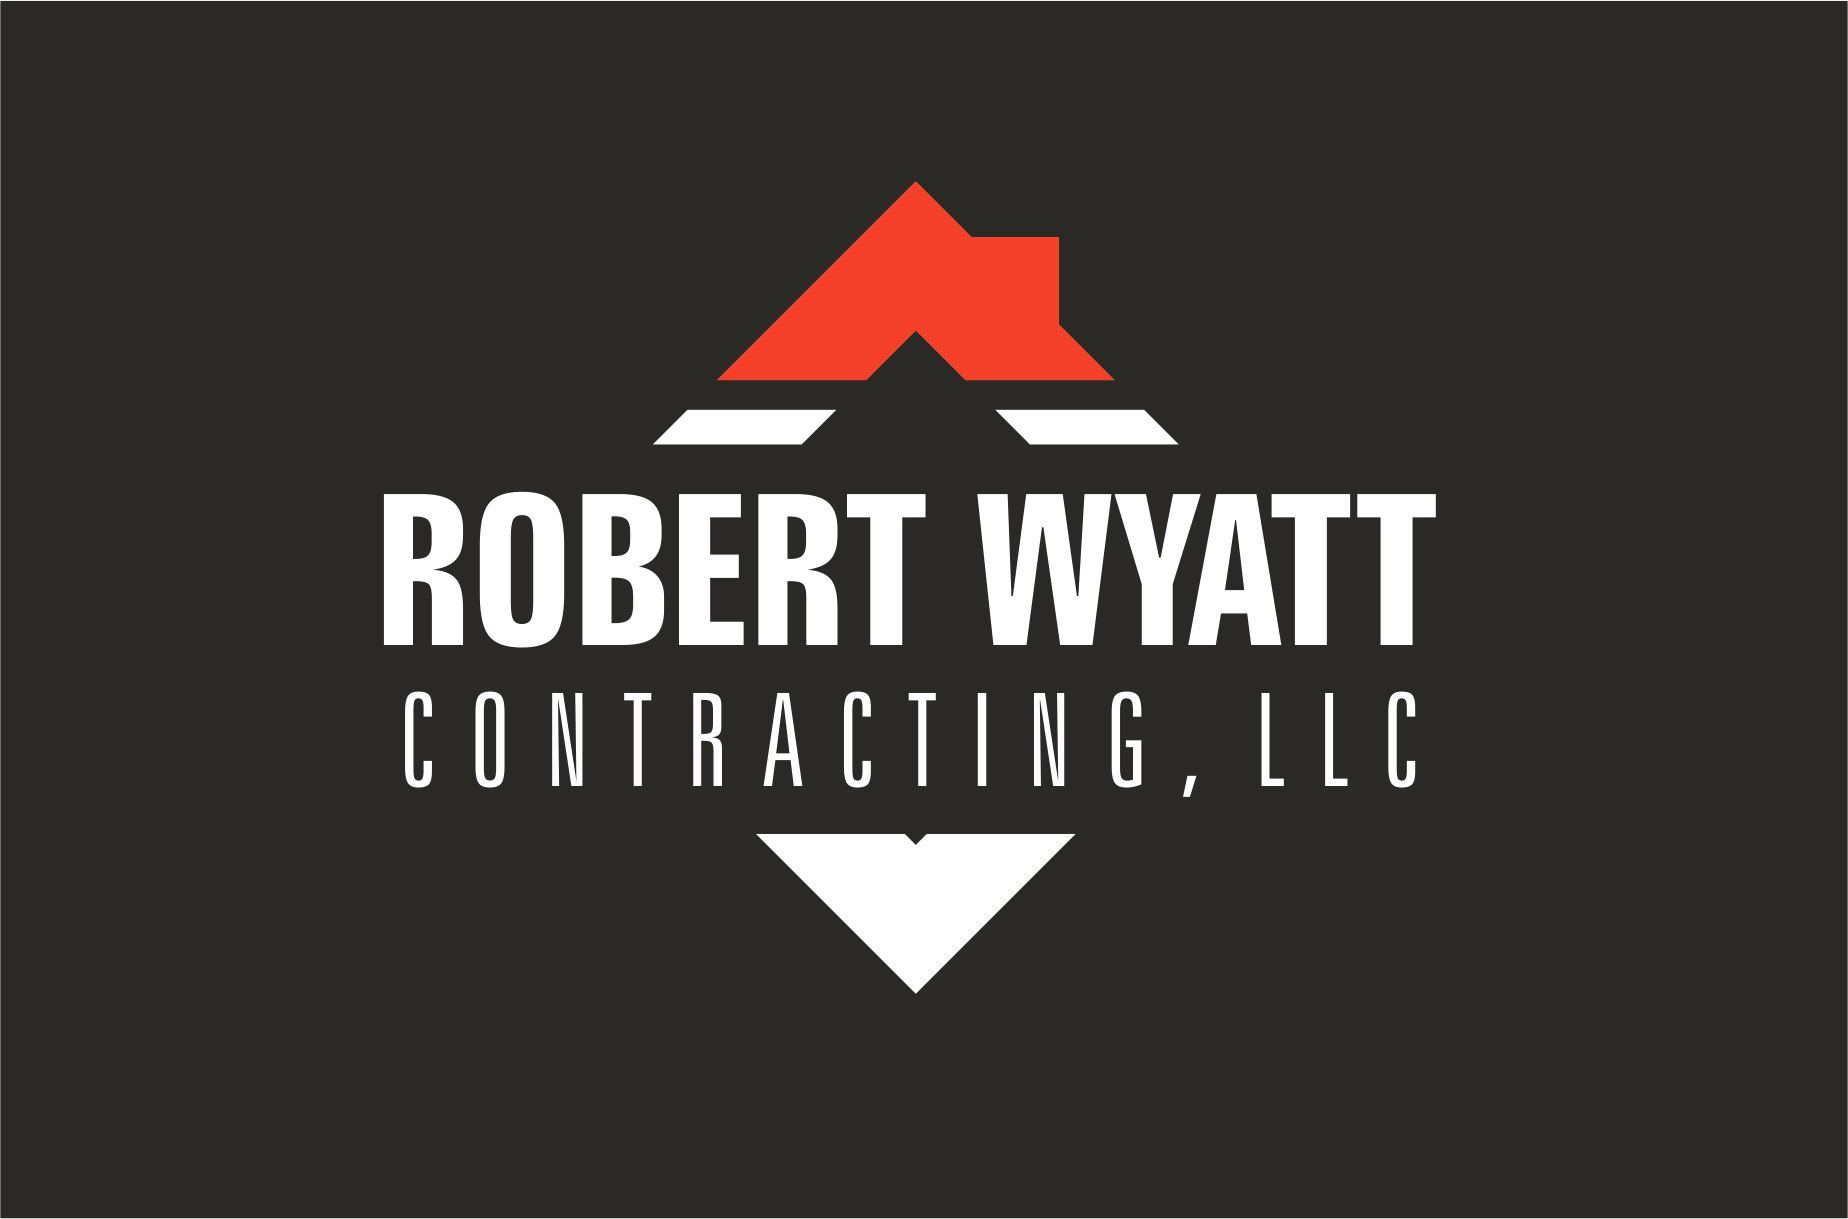 Robert Wyatt Contracting, LLC Logo